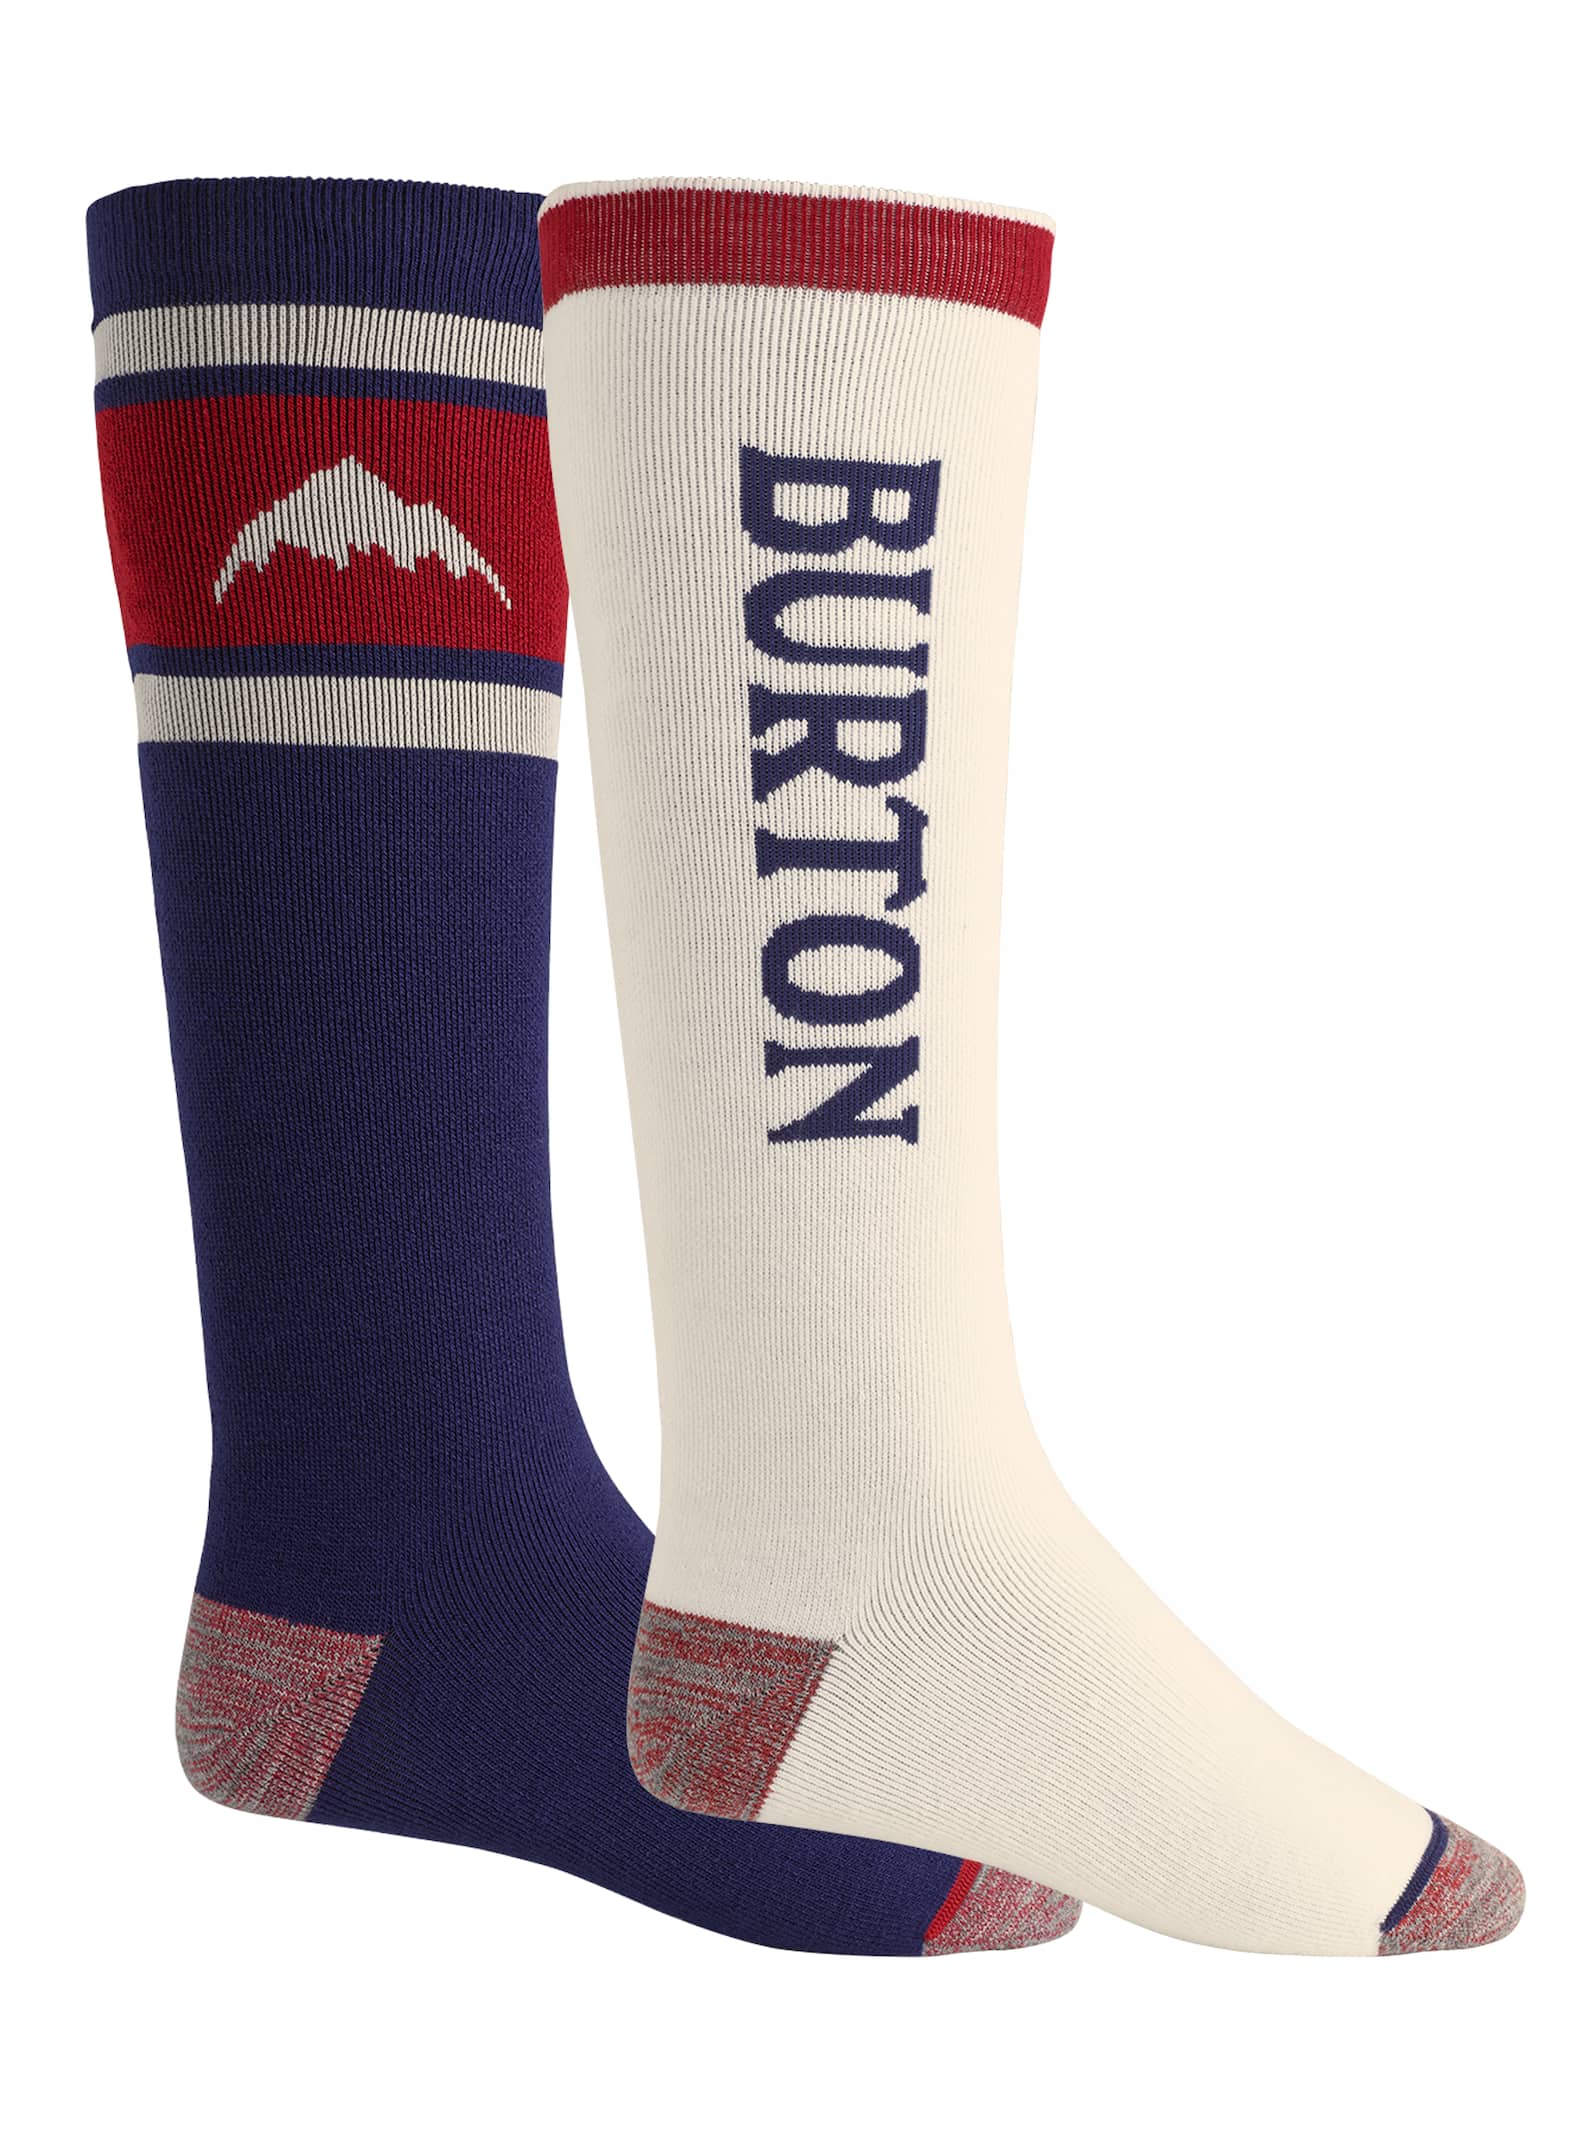 Men's Socks | Burton Snowboards IE